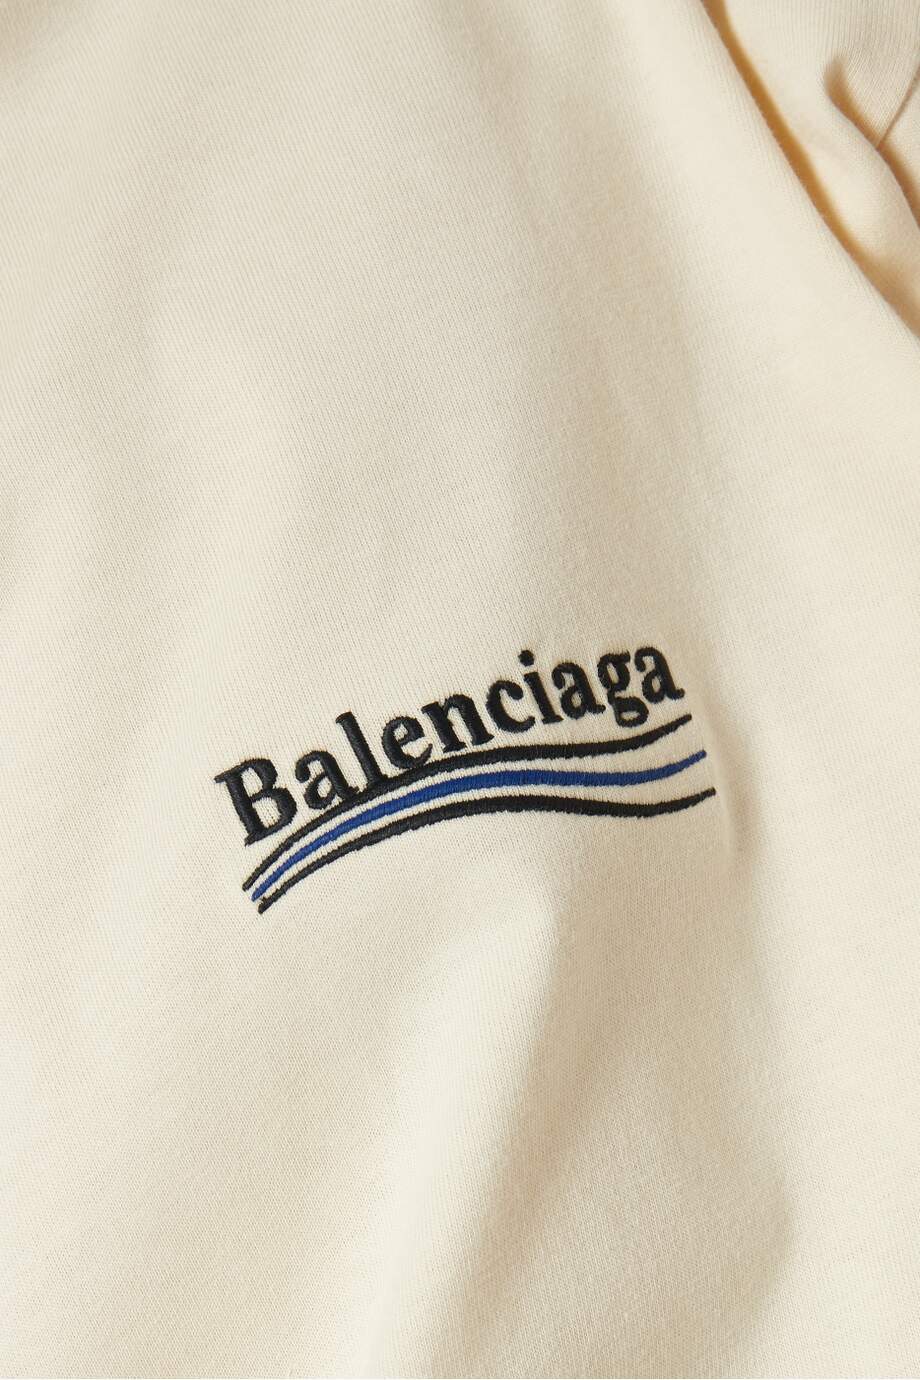 BALENCIAGA Political Campaign T-shirt in Vintage Jersey